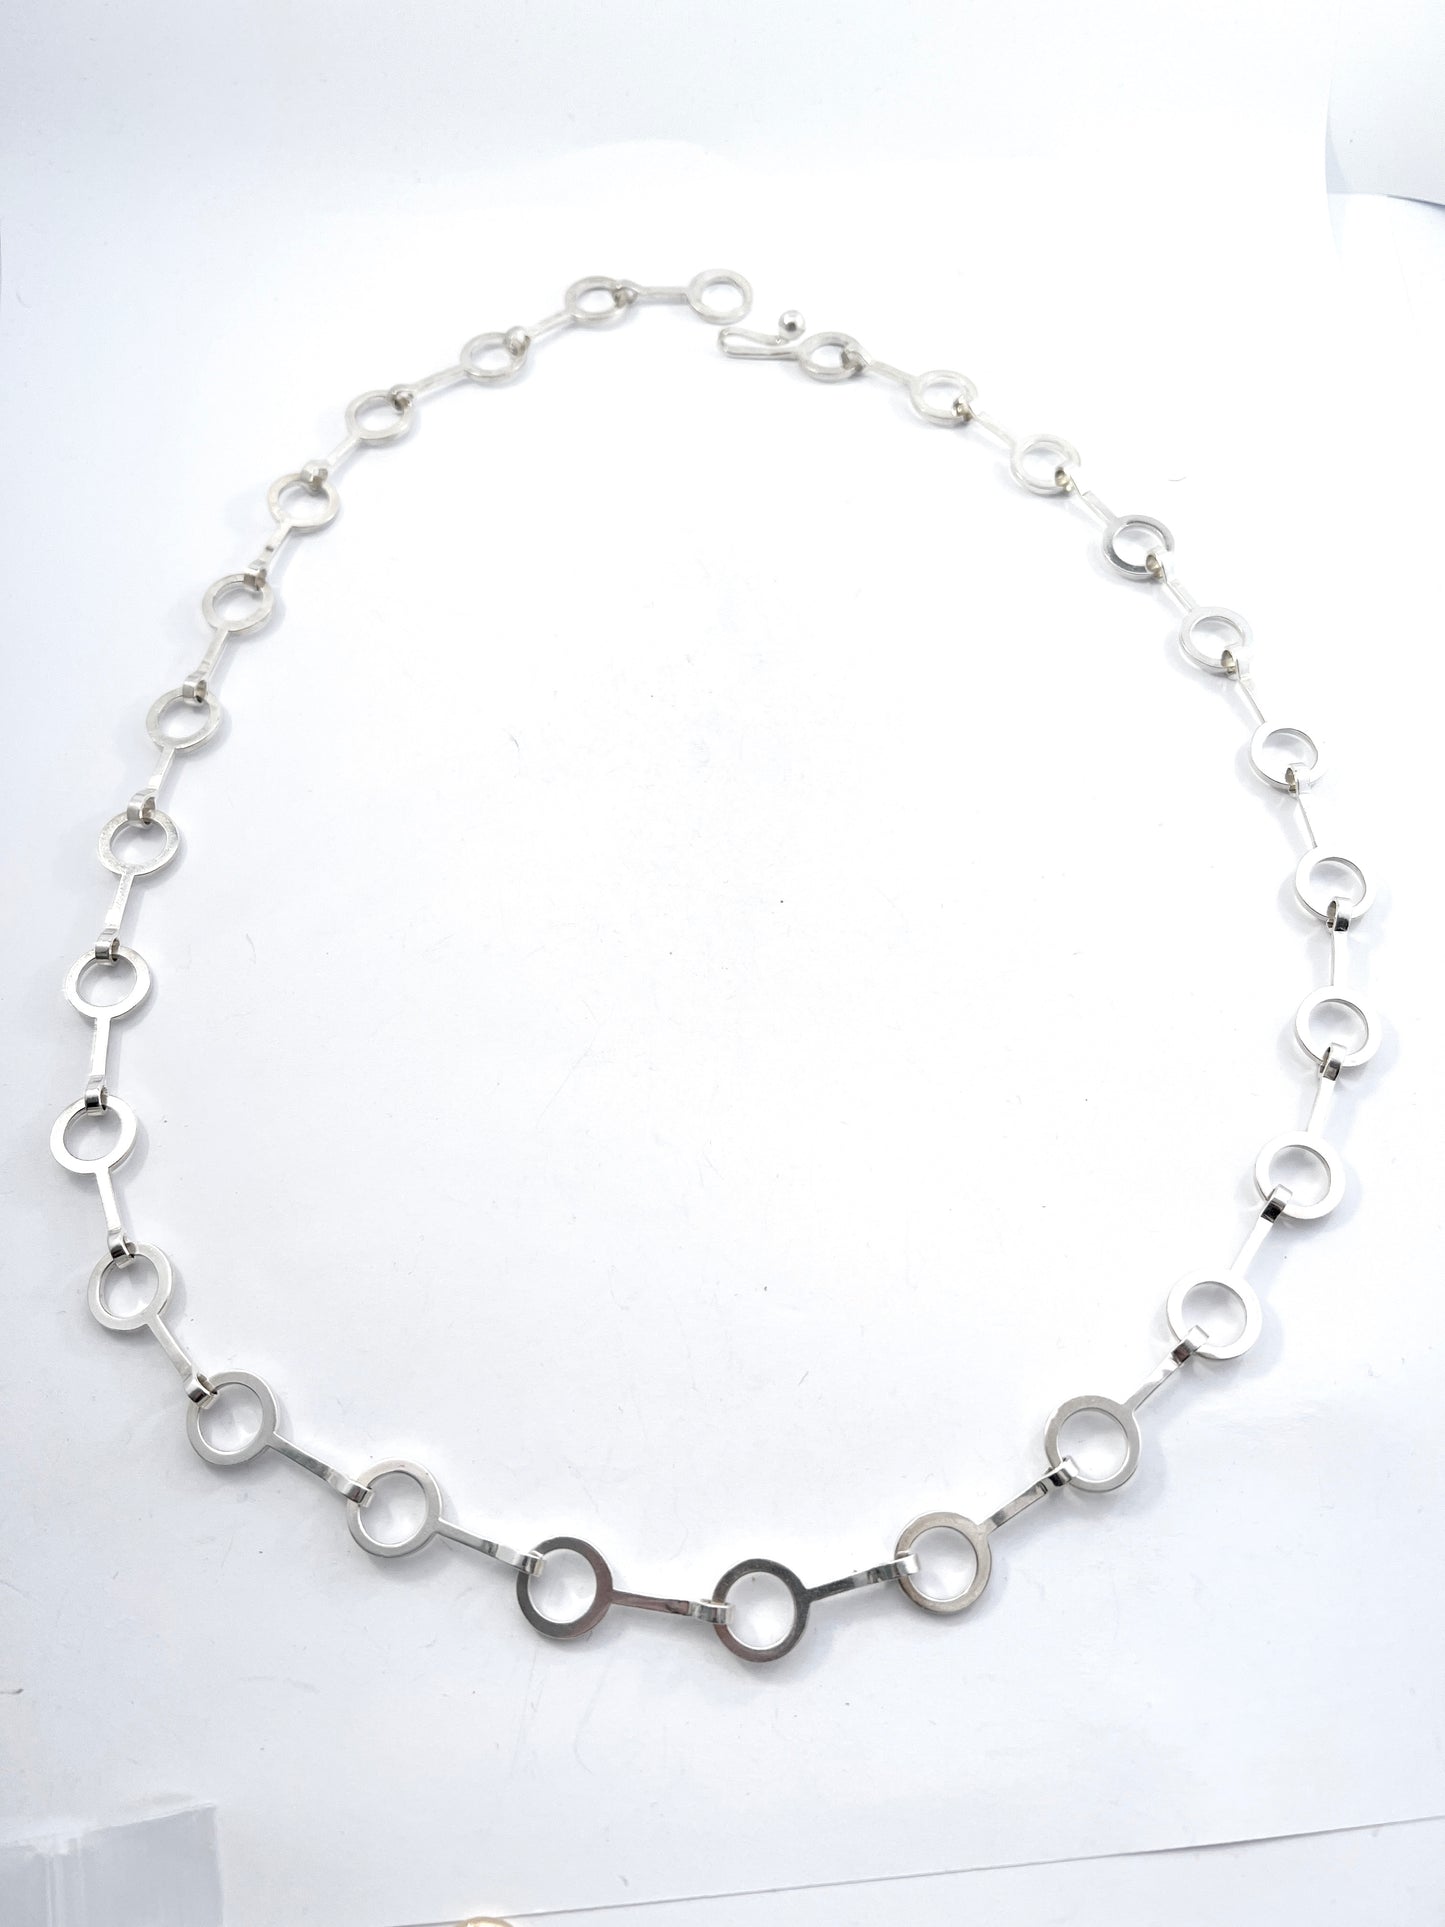 Jorma Laine for Kultateollisuus, Finland 1966. Vintage Sterling Silver Long Necklace. Rare.